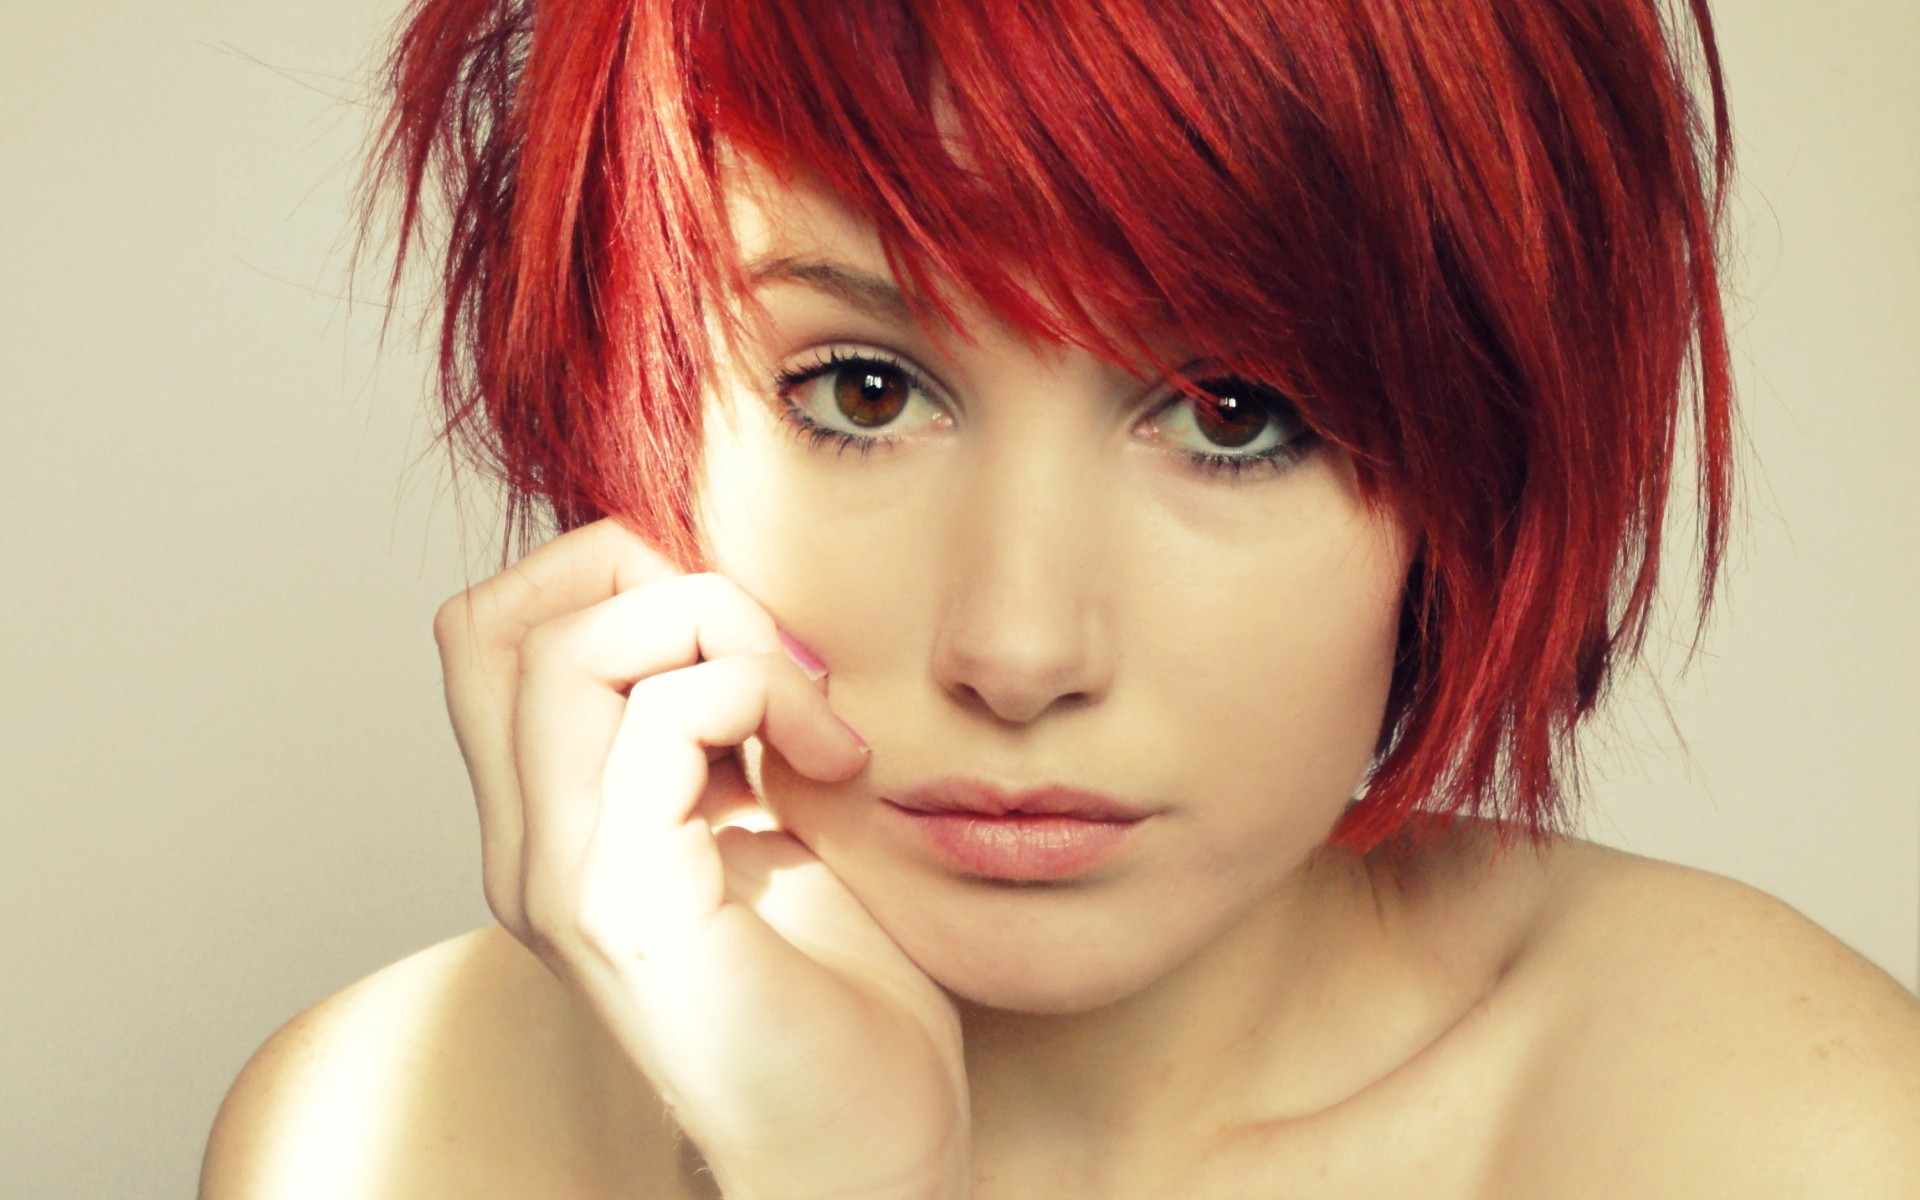 women model redhead face portrait brown eyes short hair simple background Wallpaper